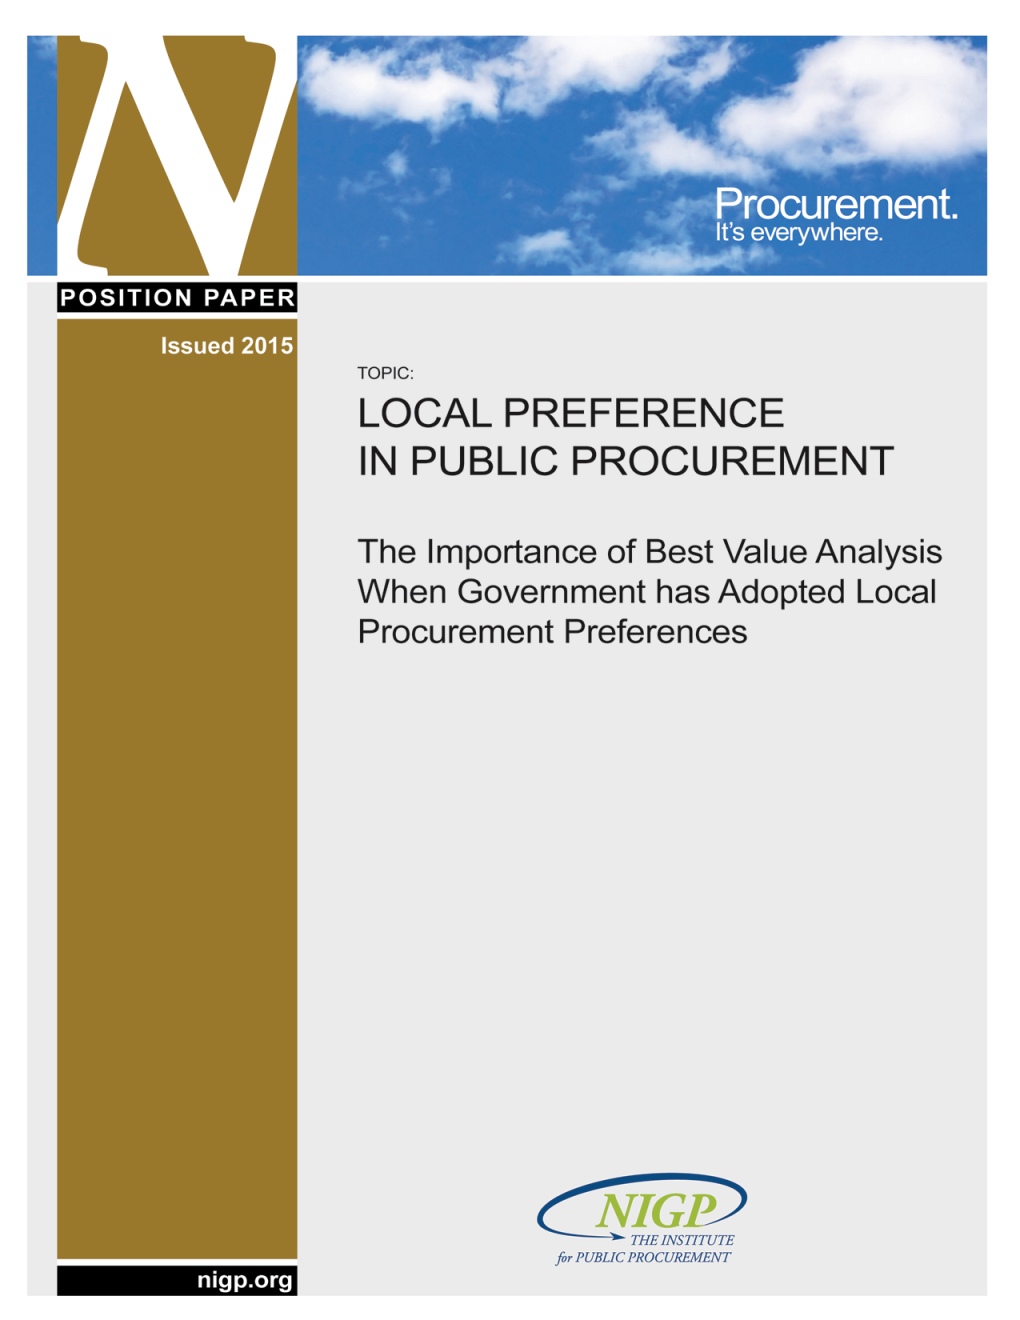 Local Preference in Public Procurement Position Paper